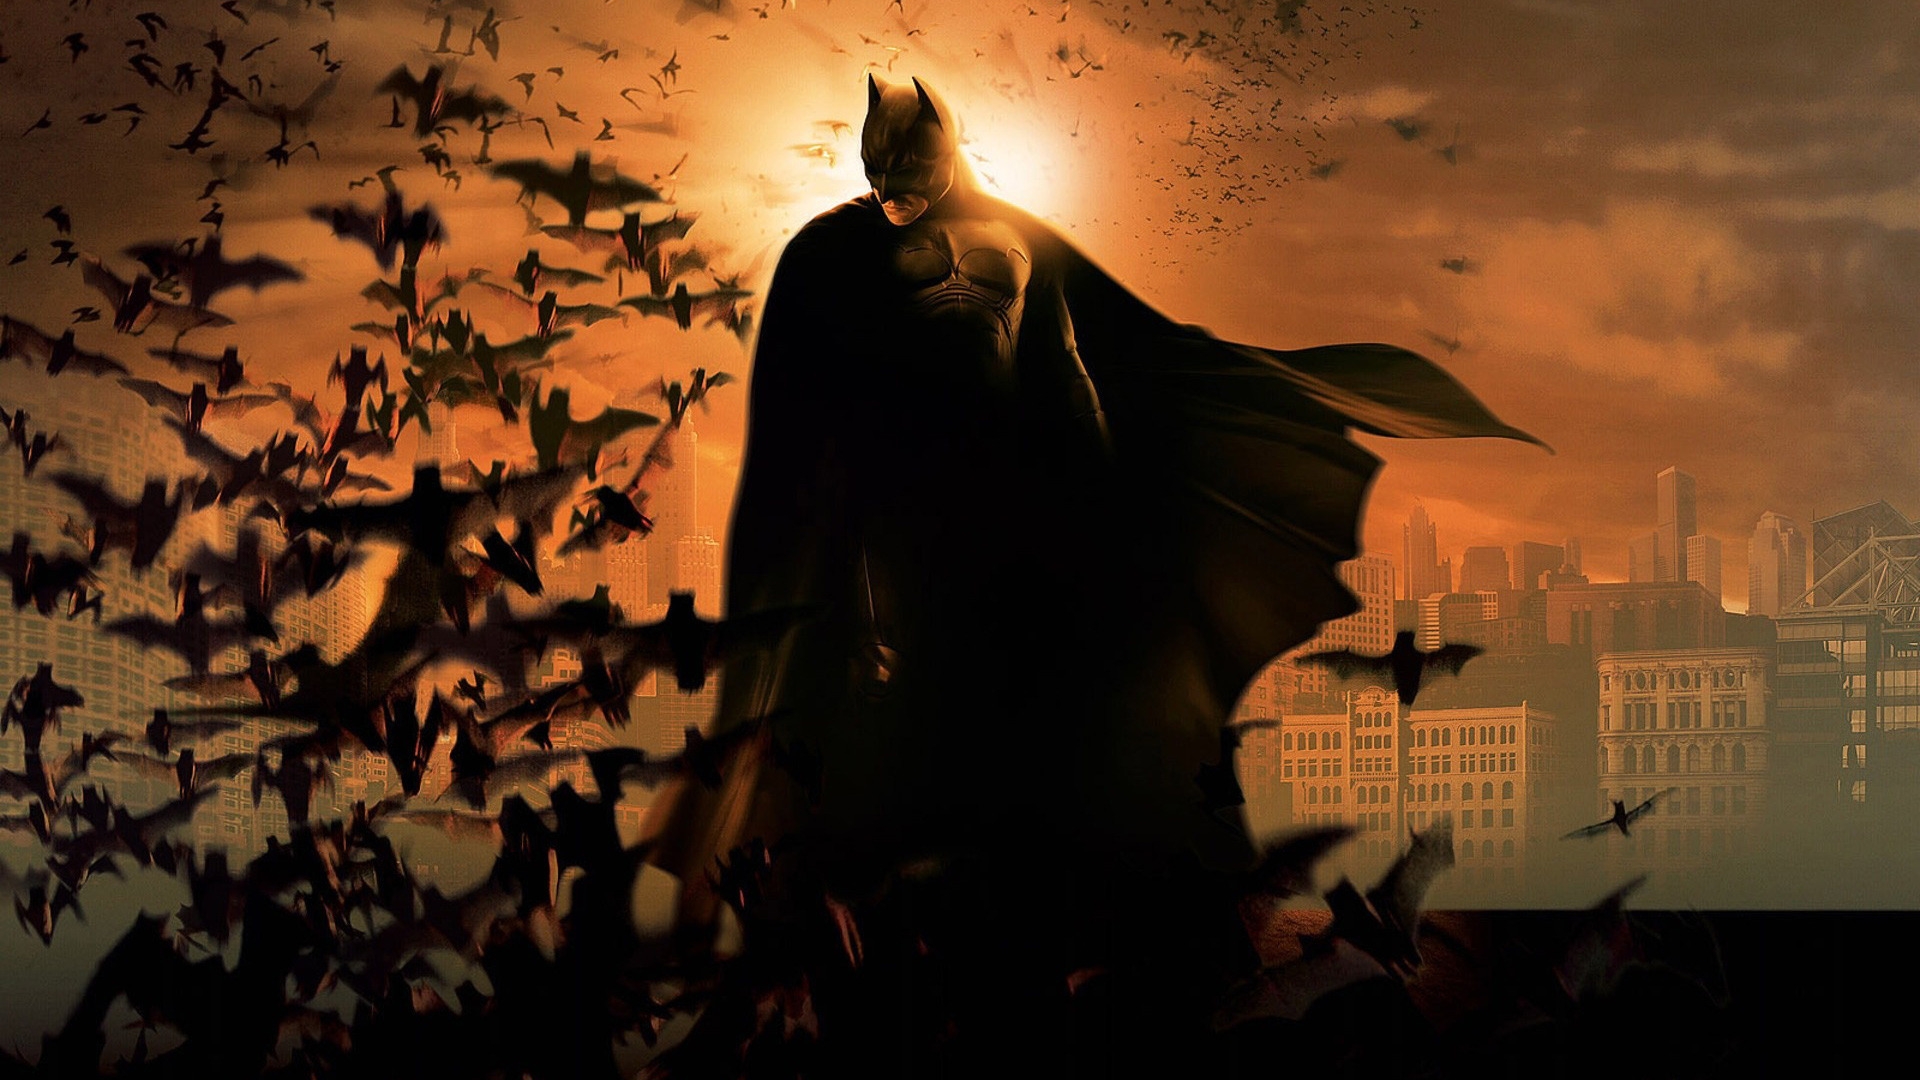 Batman 3 The Dark Knight rises for 1920 x 1080 HDTV 1080p resolution